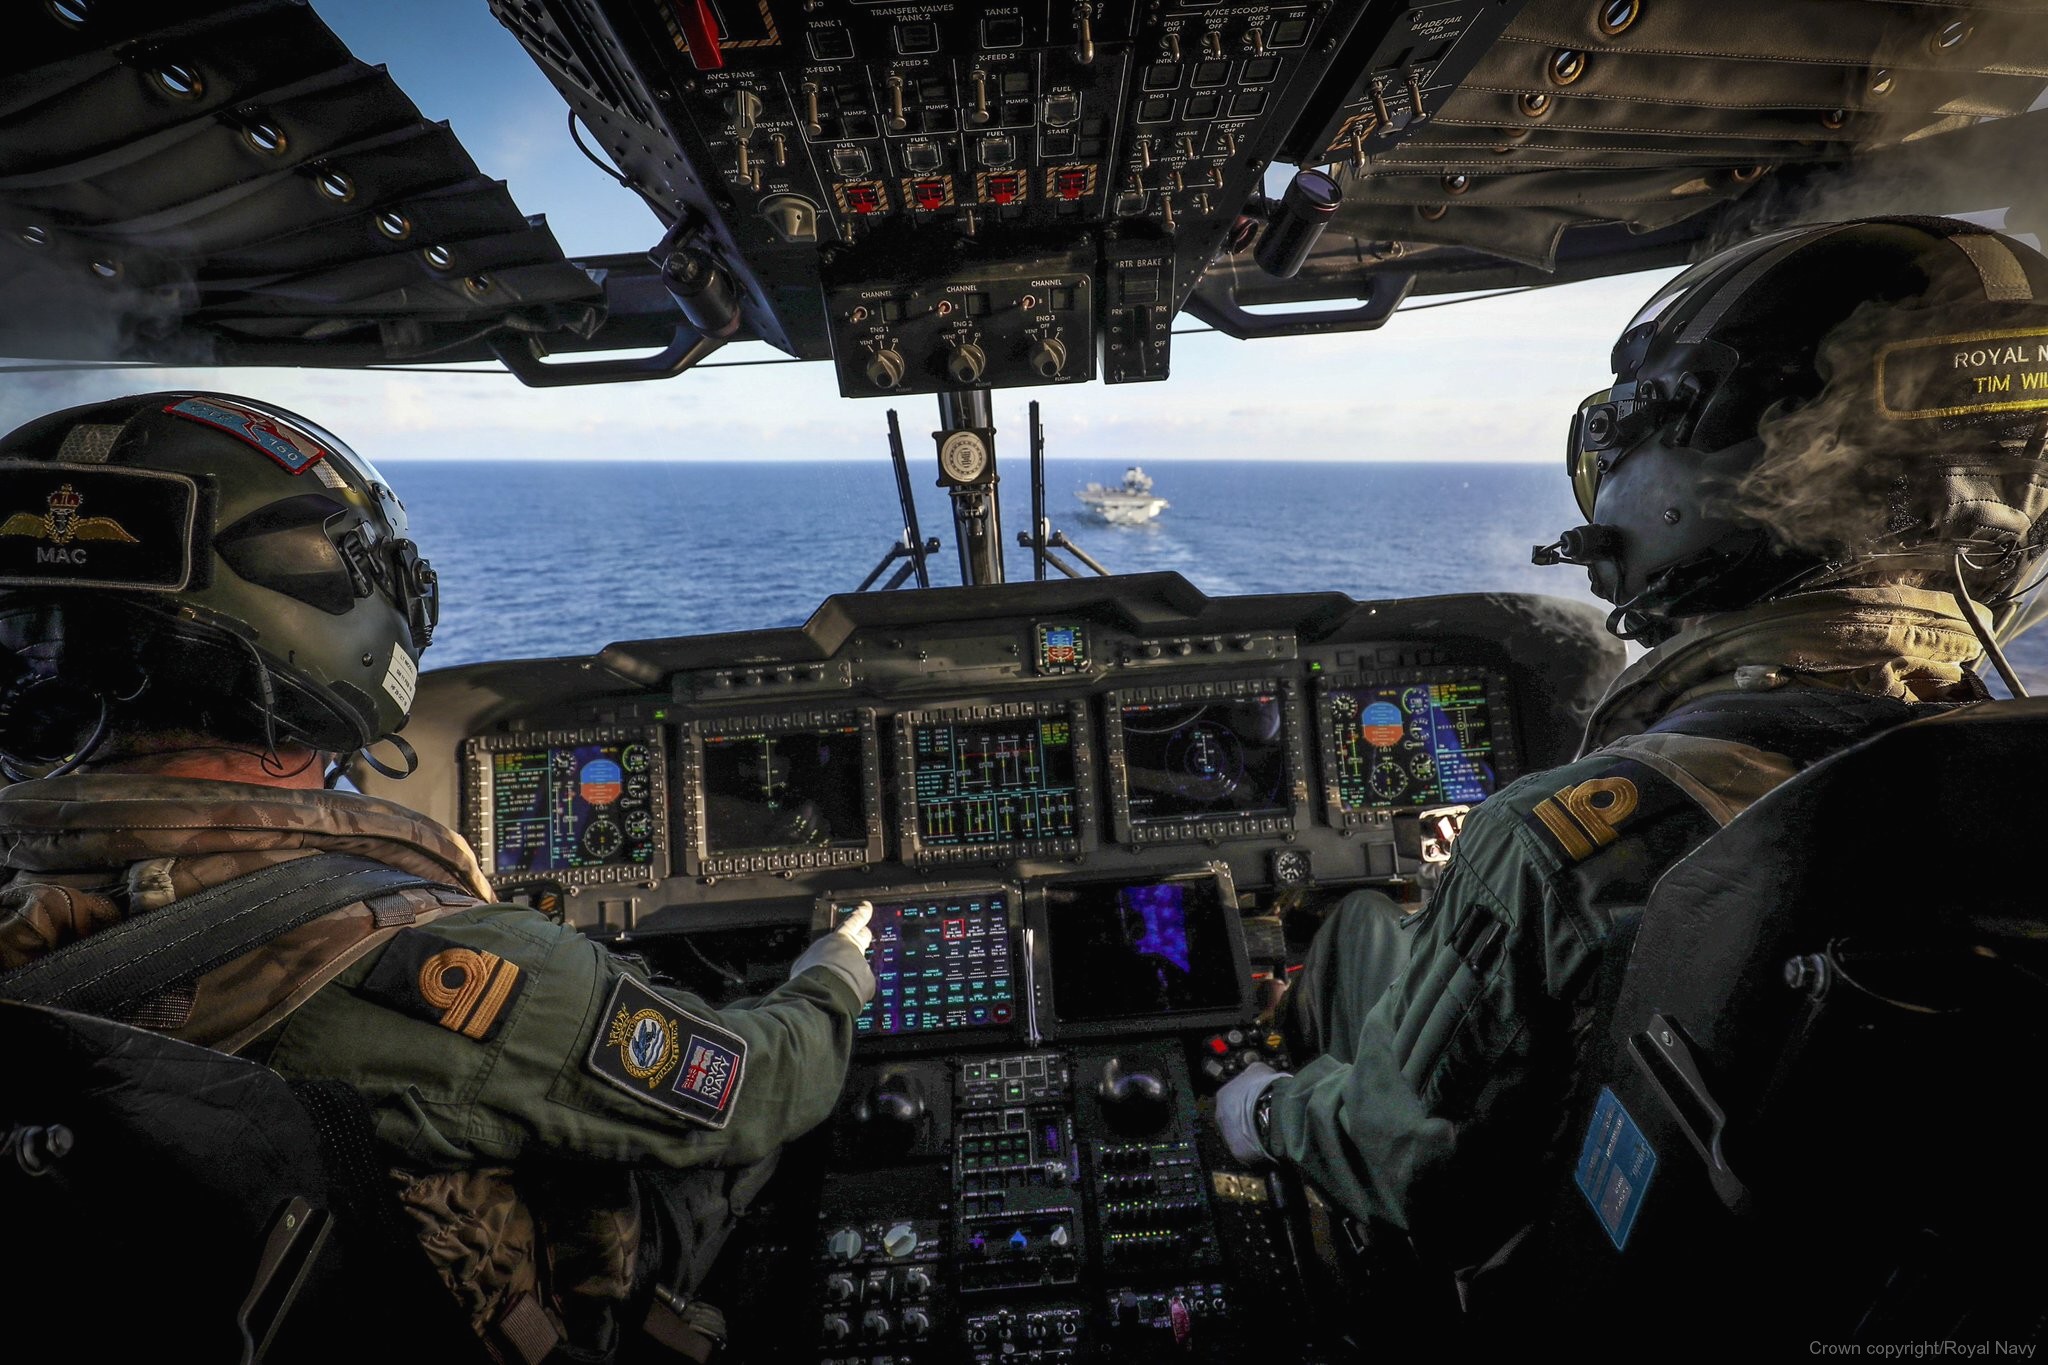 merlin hm2 helicopter royal navy agusta westland aw101 naval air squadron nas rnas culdrose 60 cockpit view